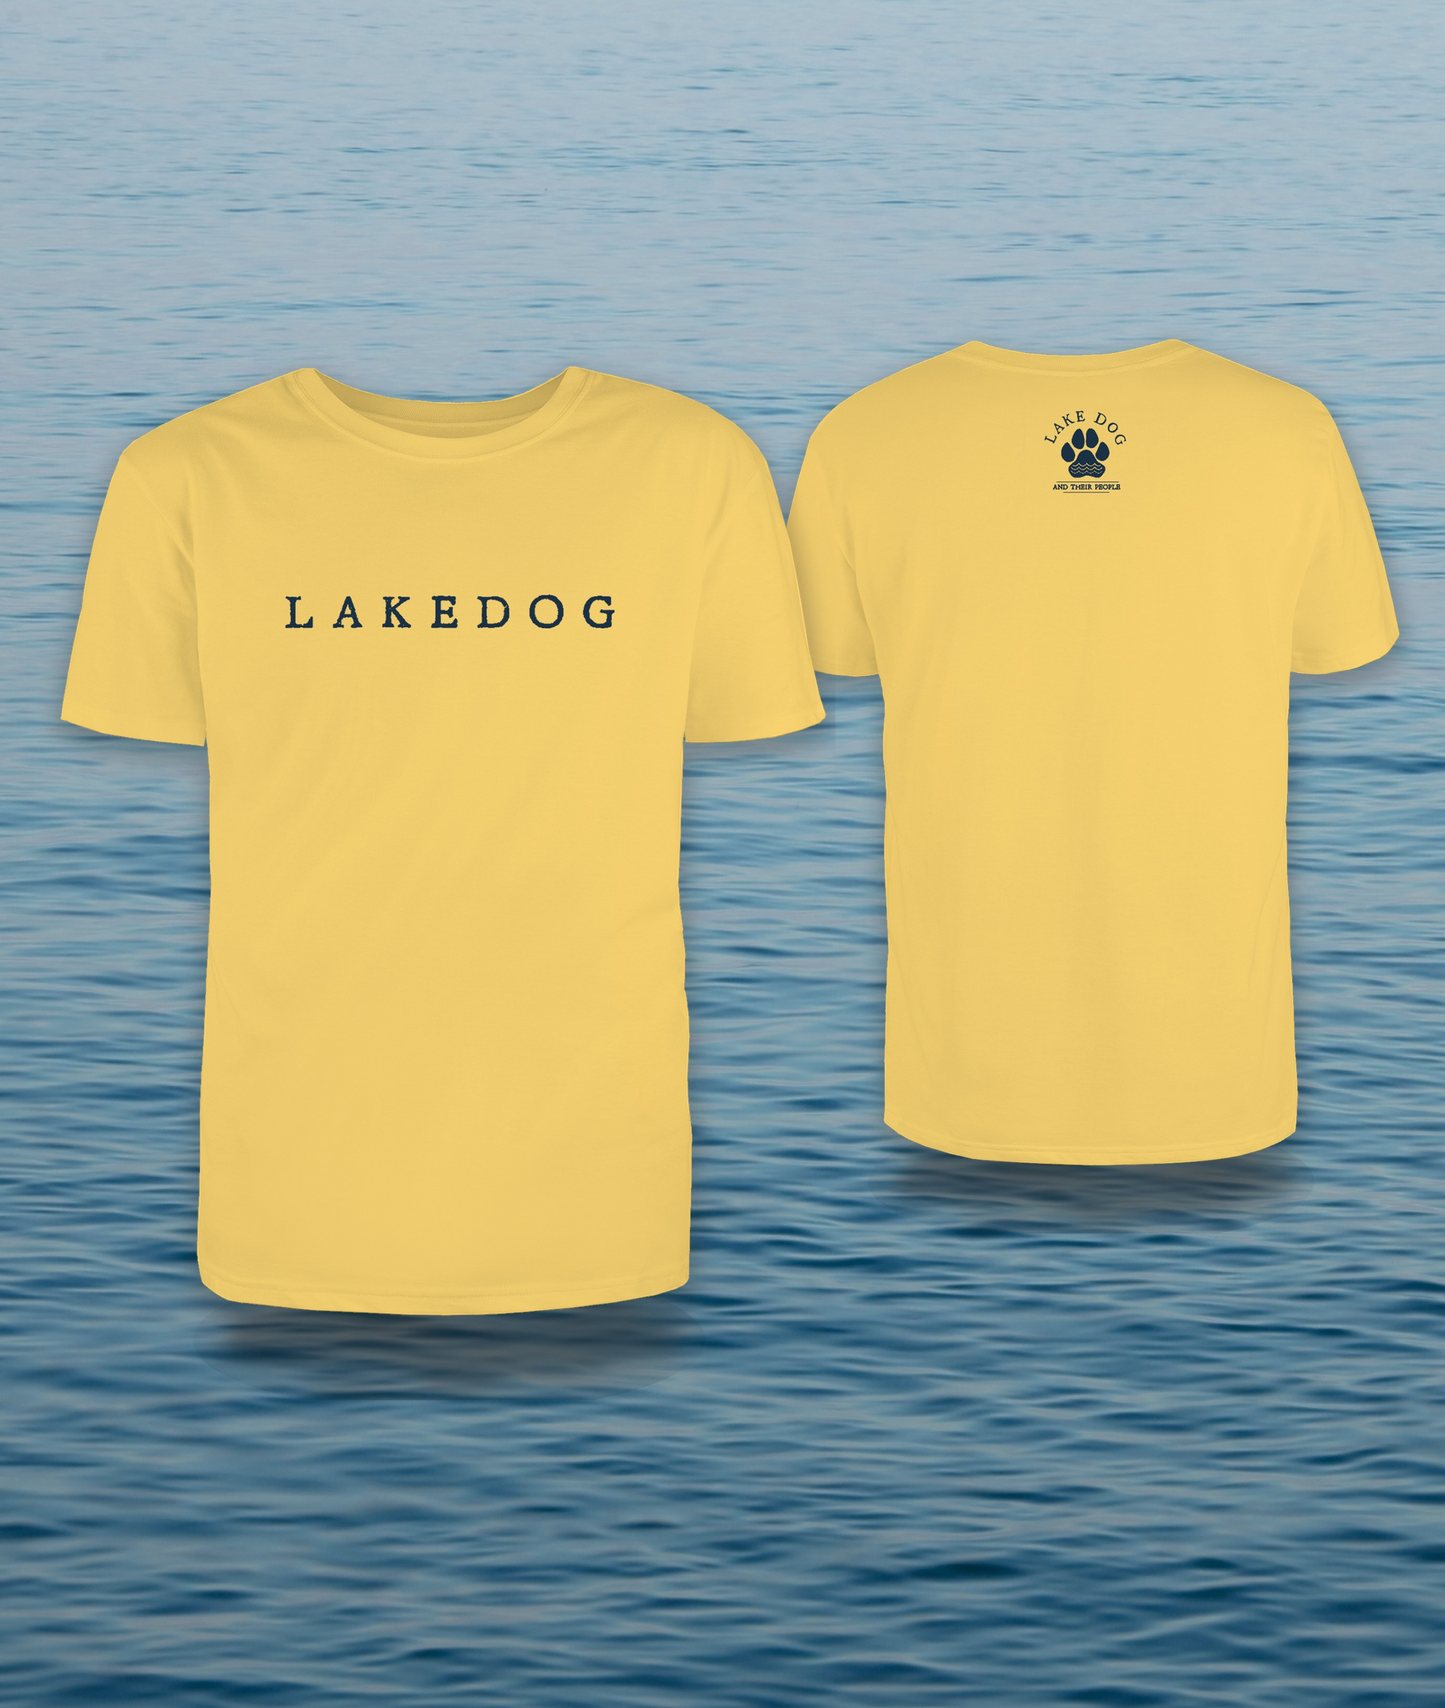 Lake Dog (simple text) shirt